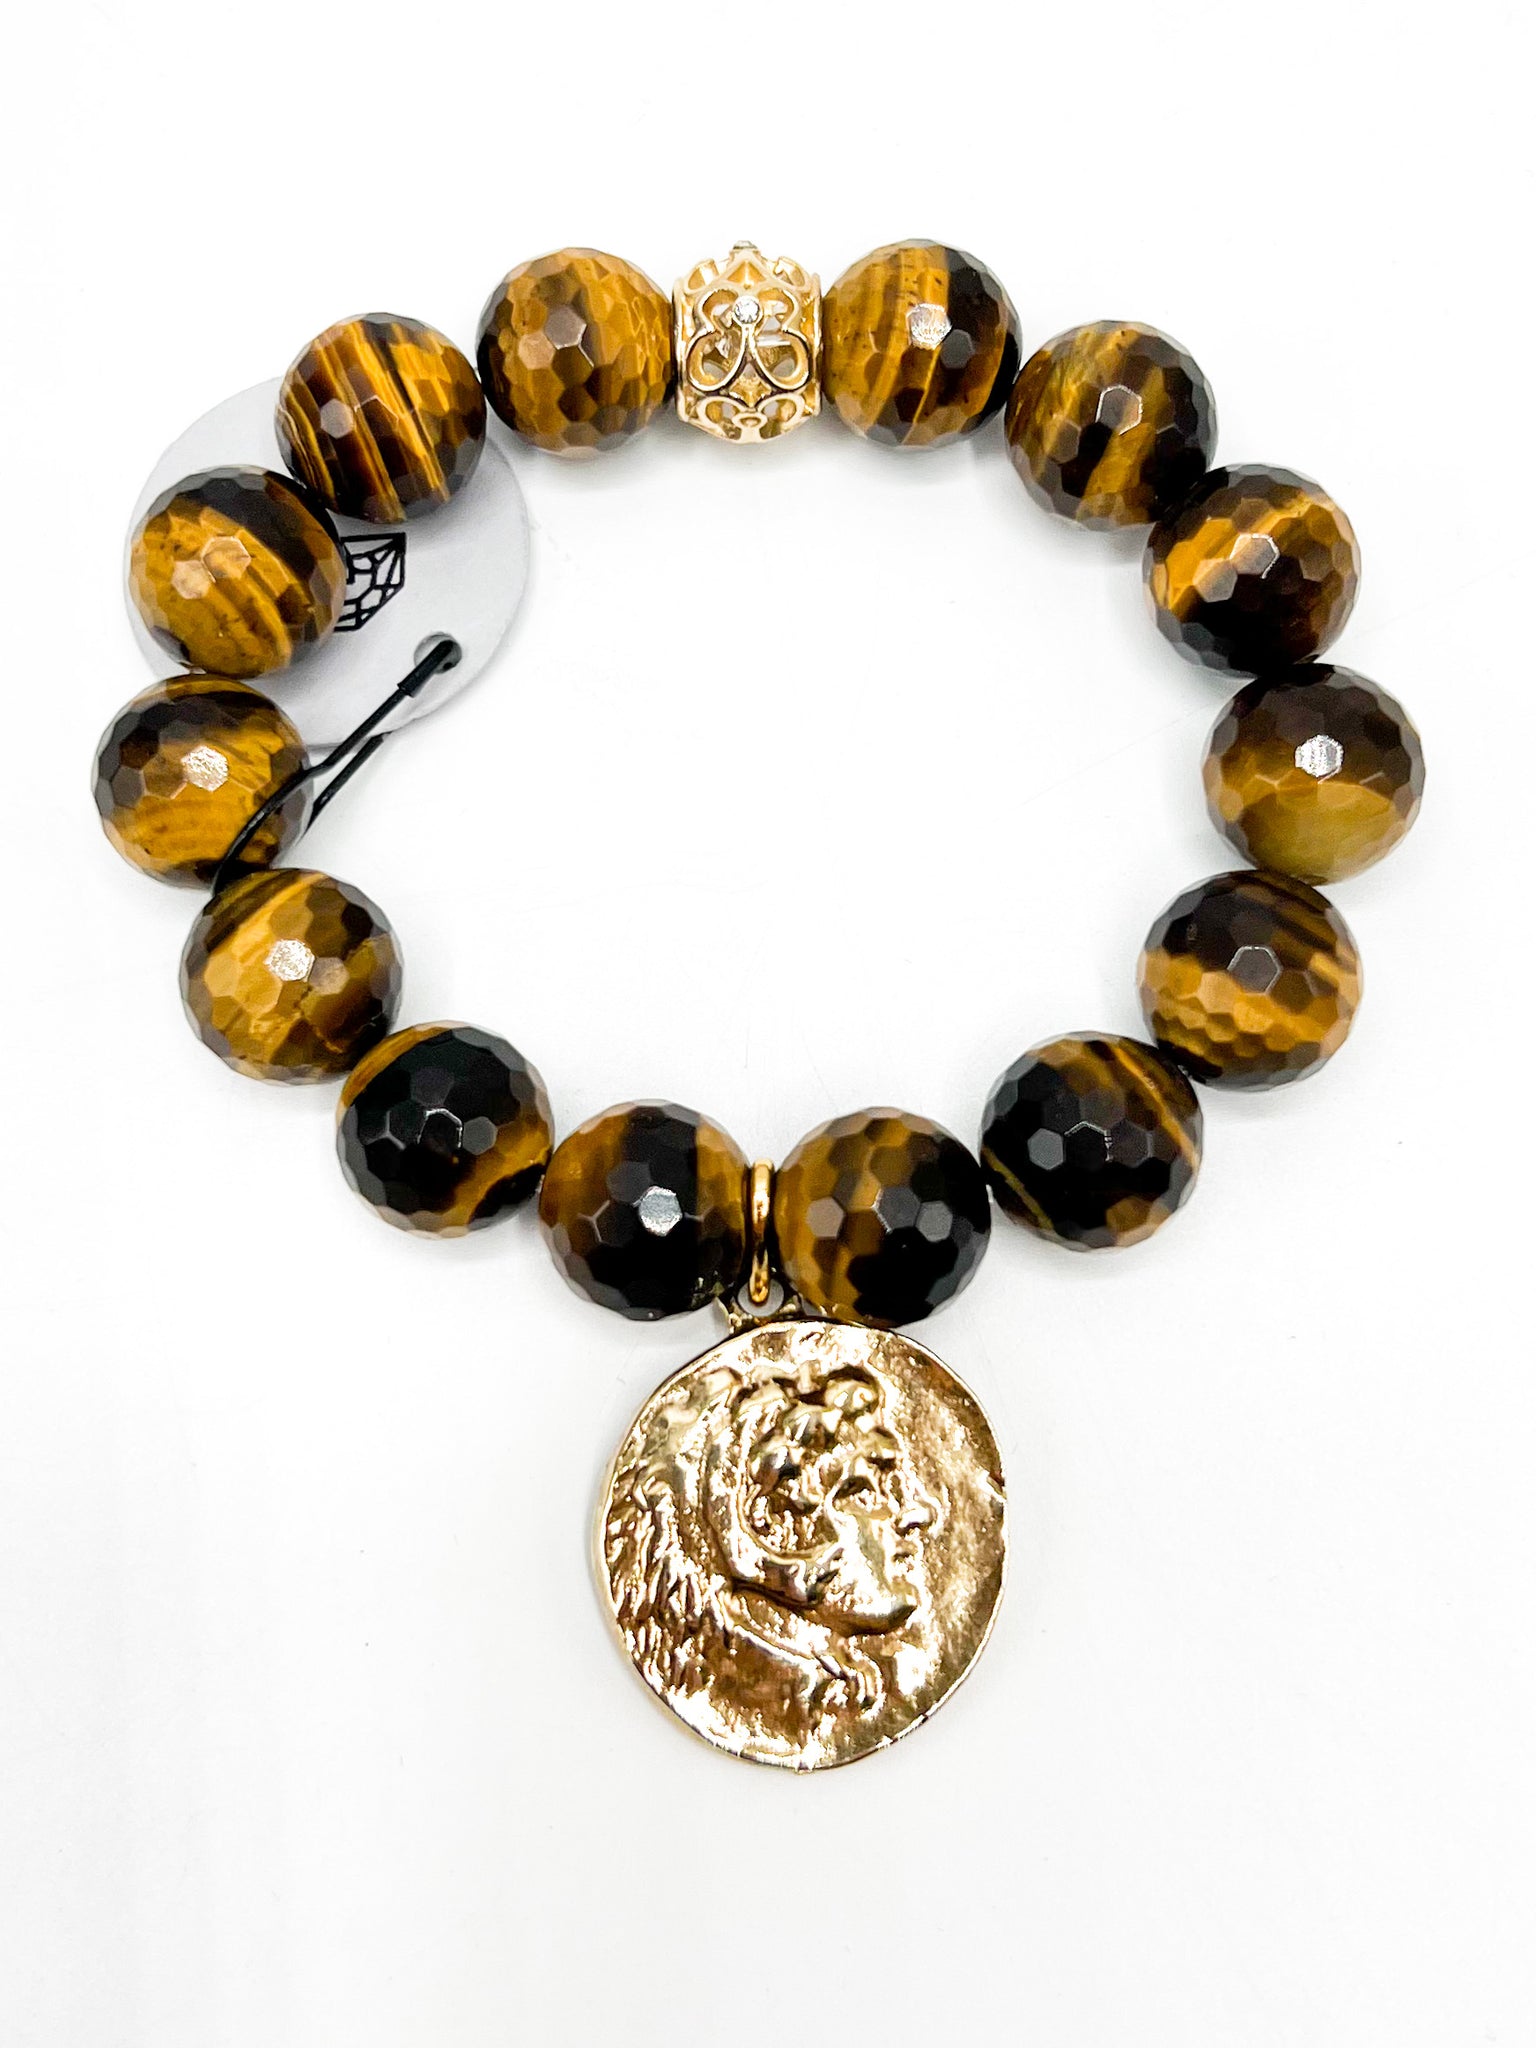 Tigers Eye bracelet